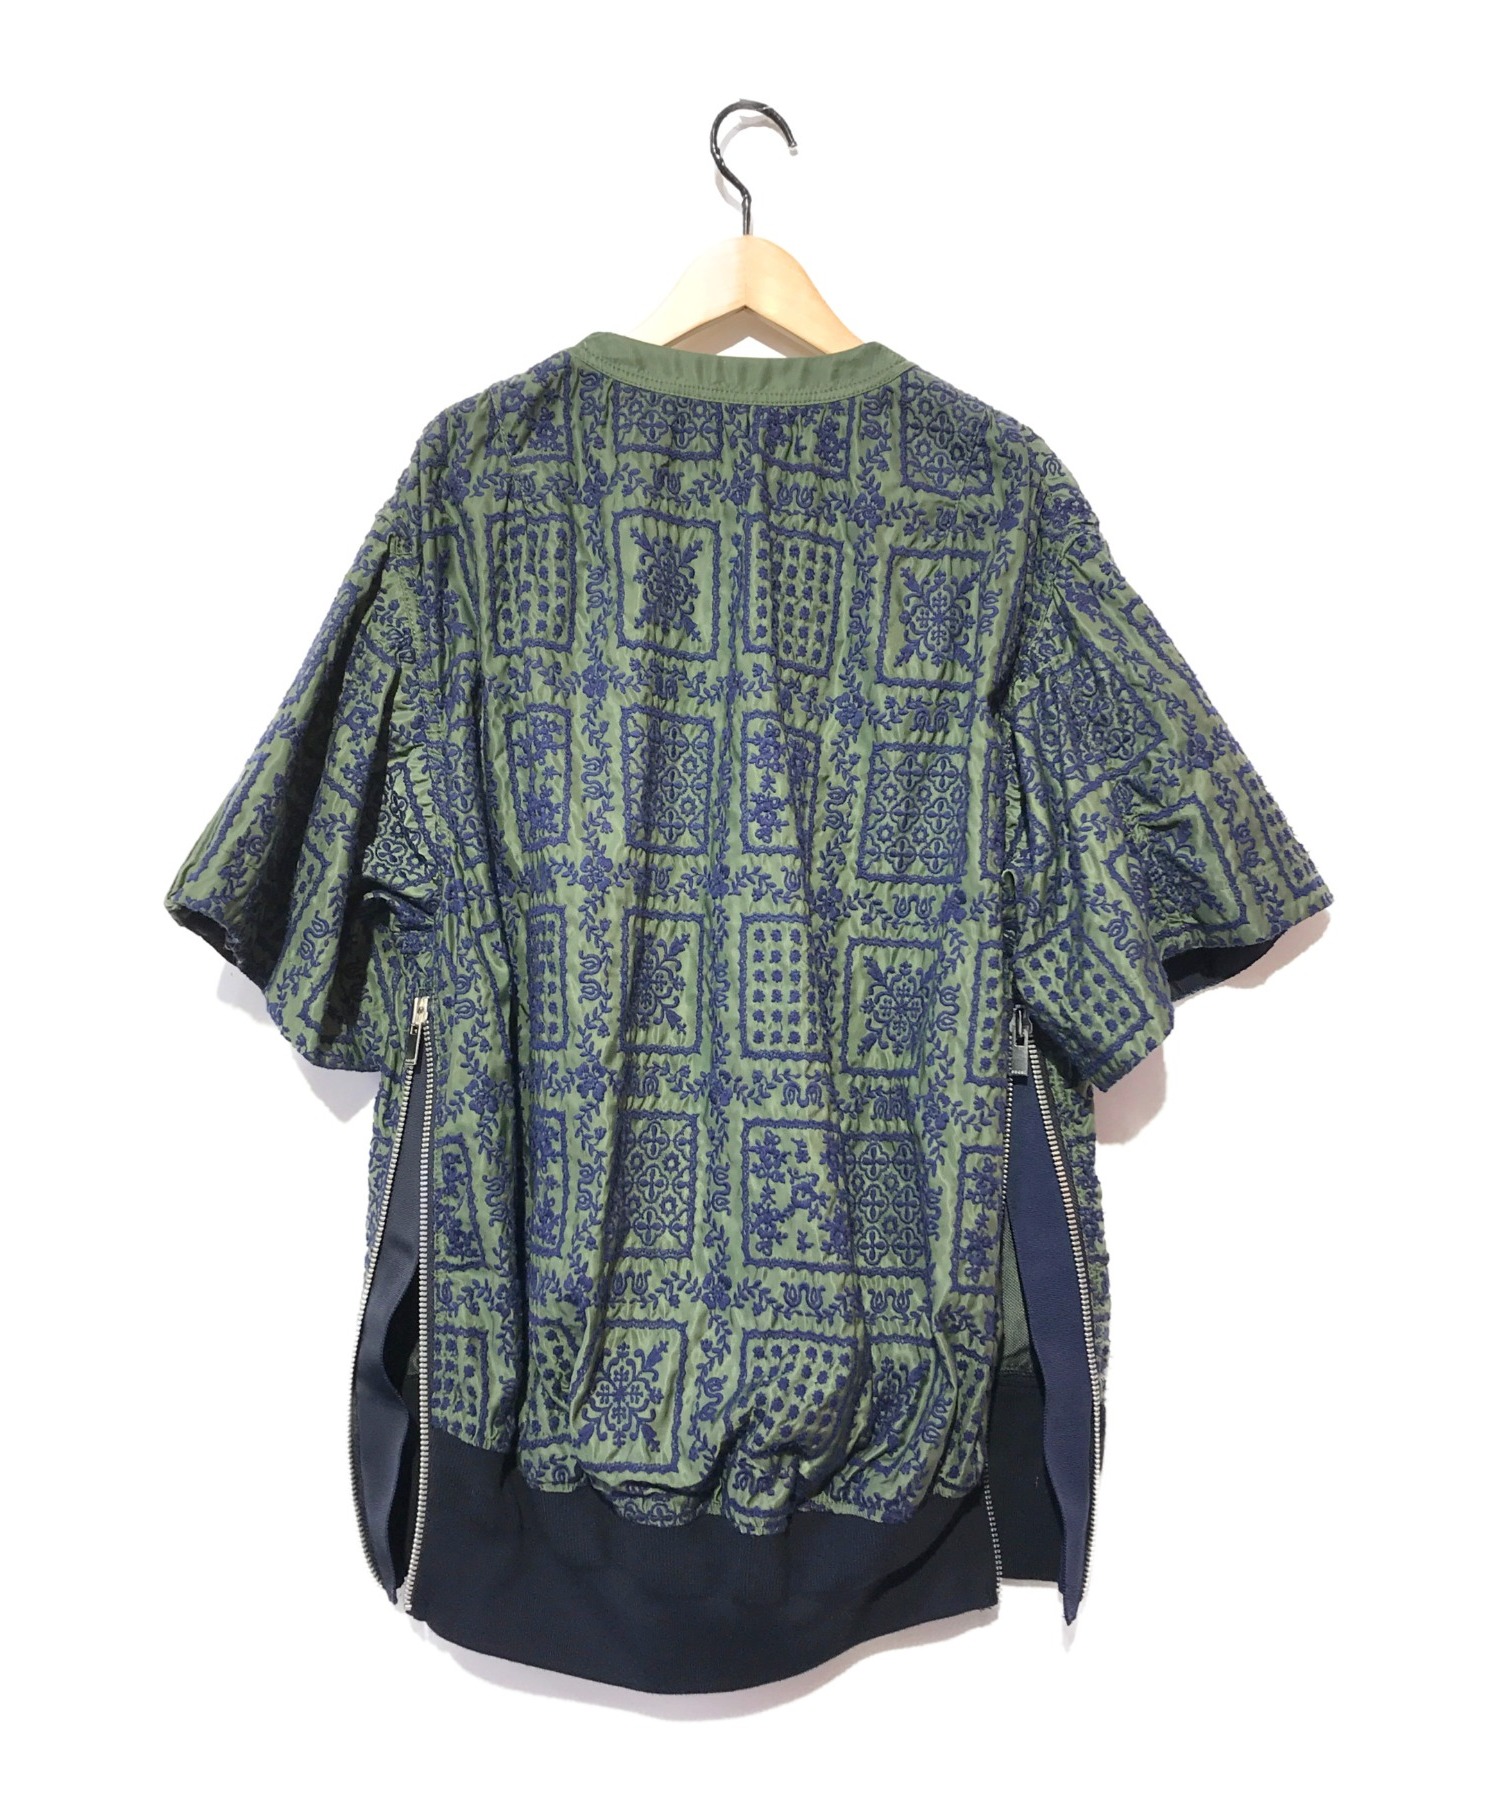 sacai 半袖 刺繍シャツ 18ss 定価32400円 - シャツ